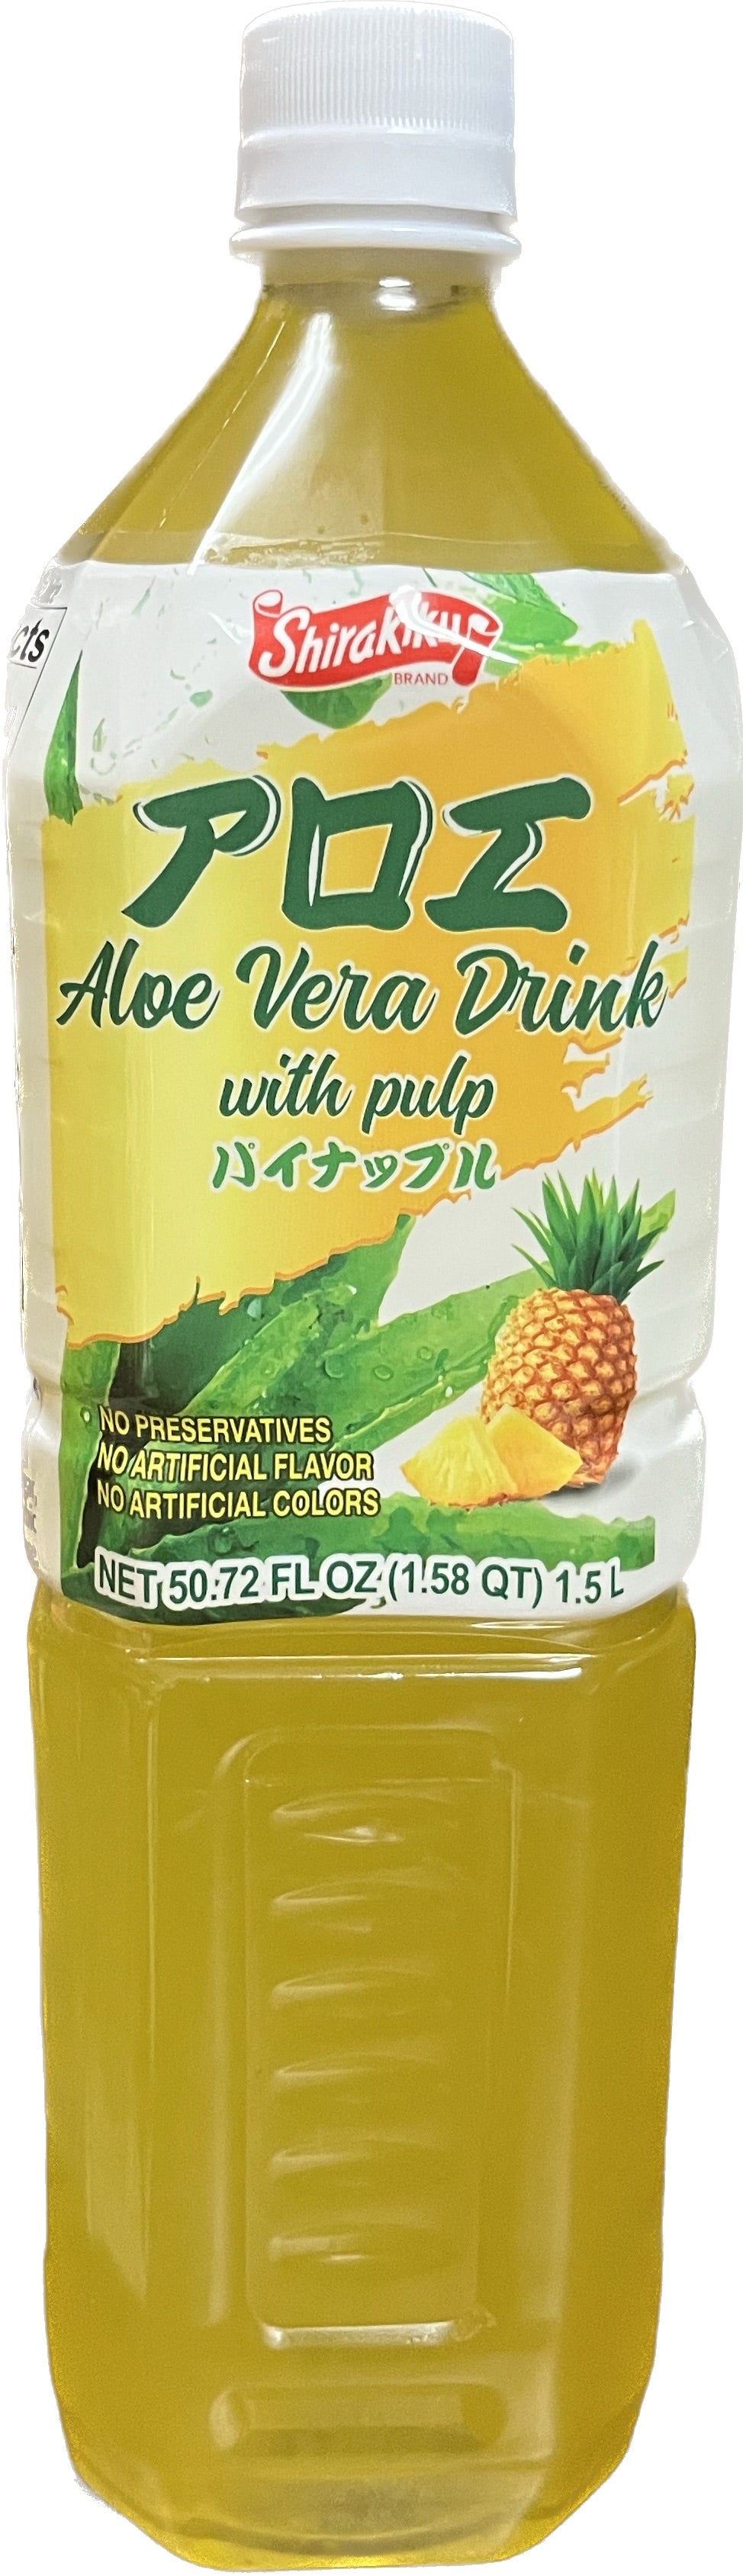 Shirakiku Pineapple Aloe Vera Drink with pulp - 1.5L-2